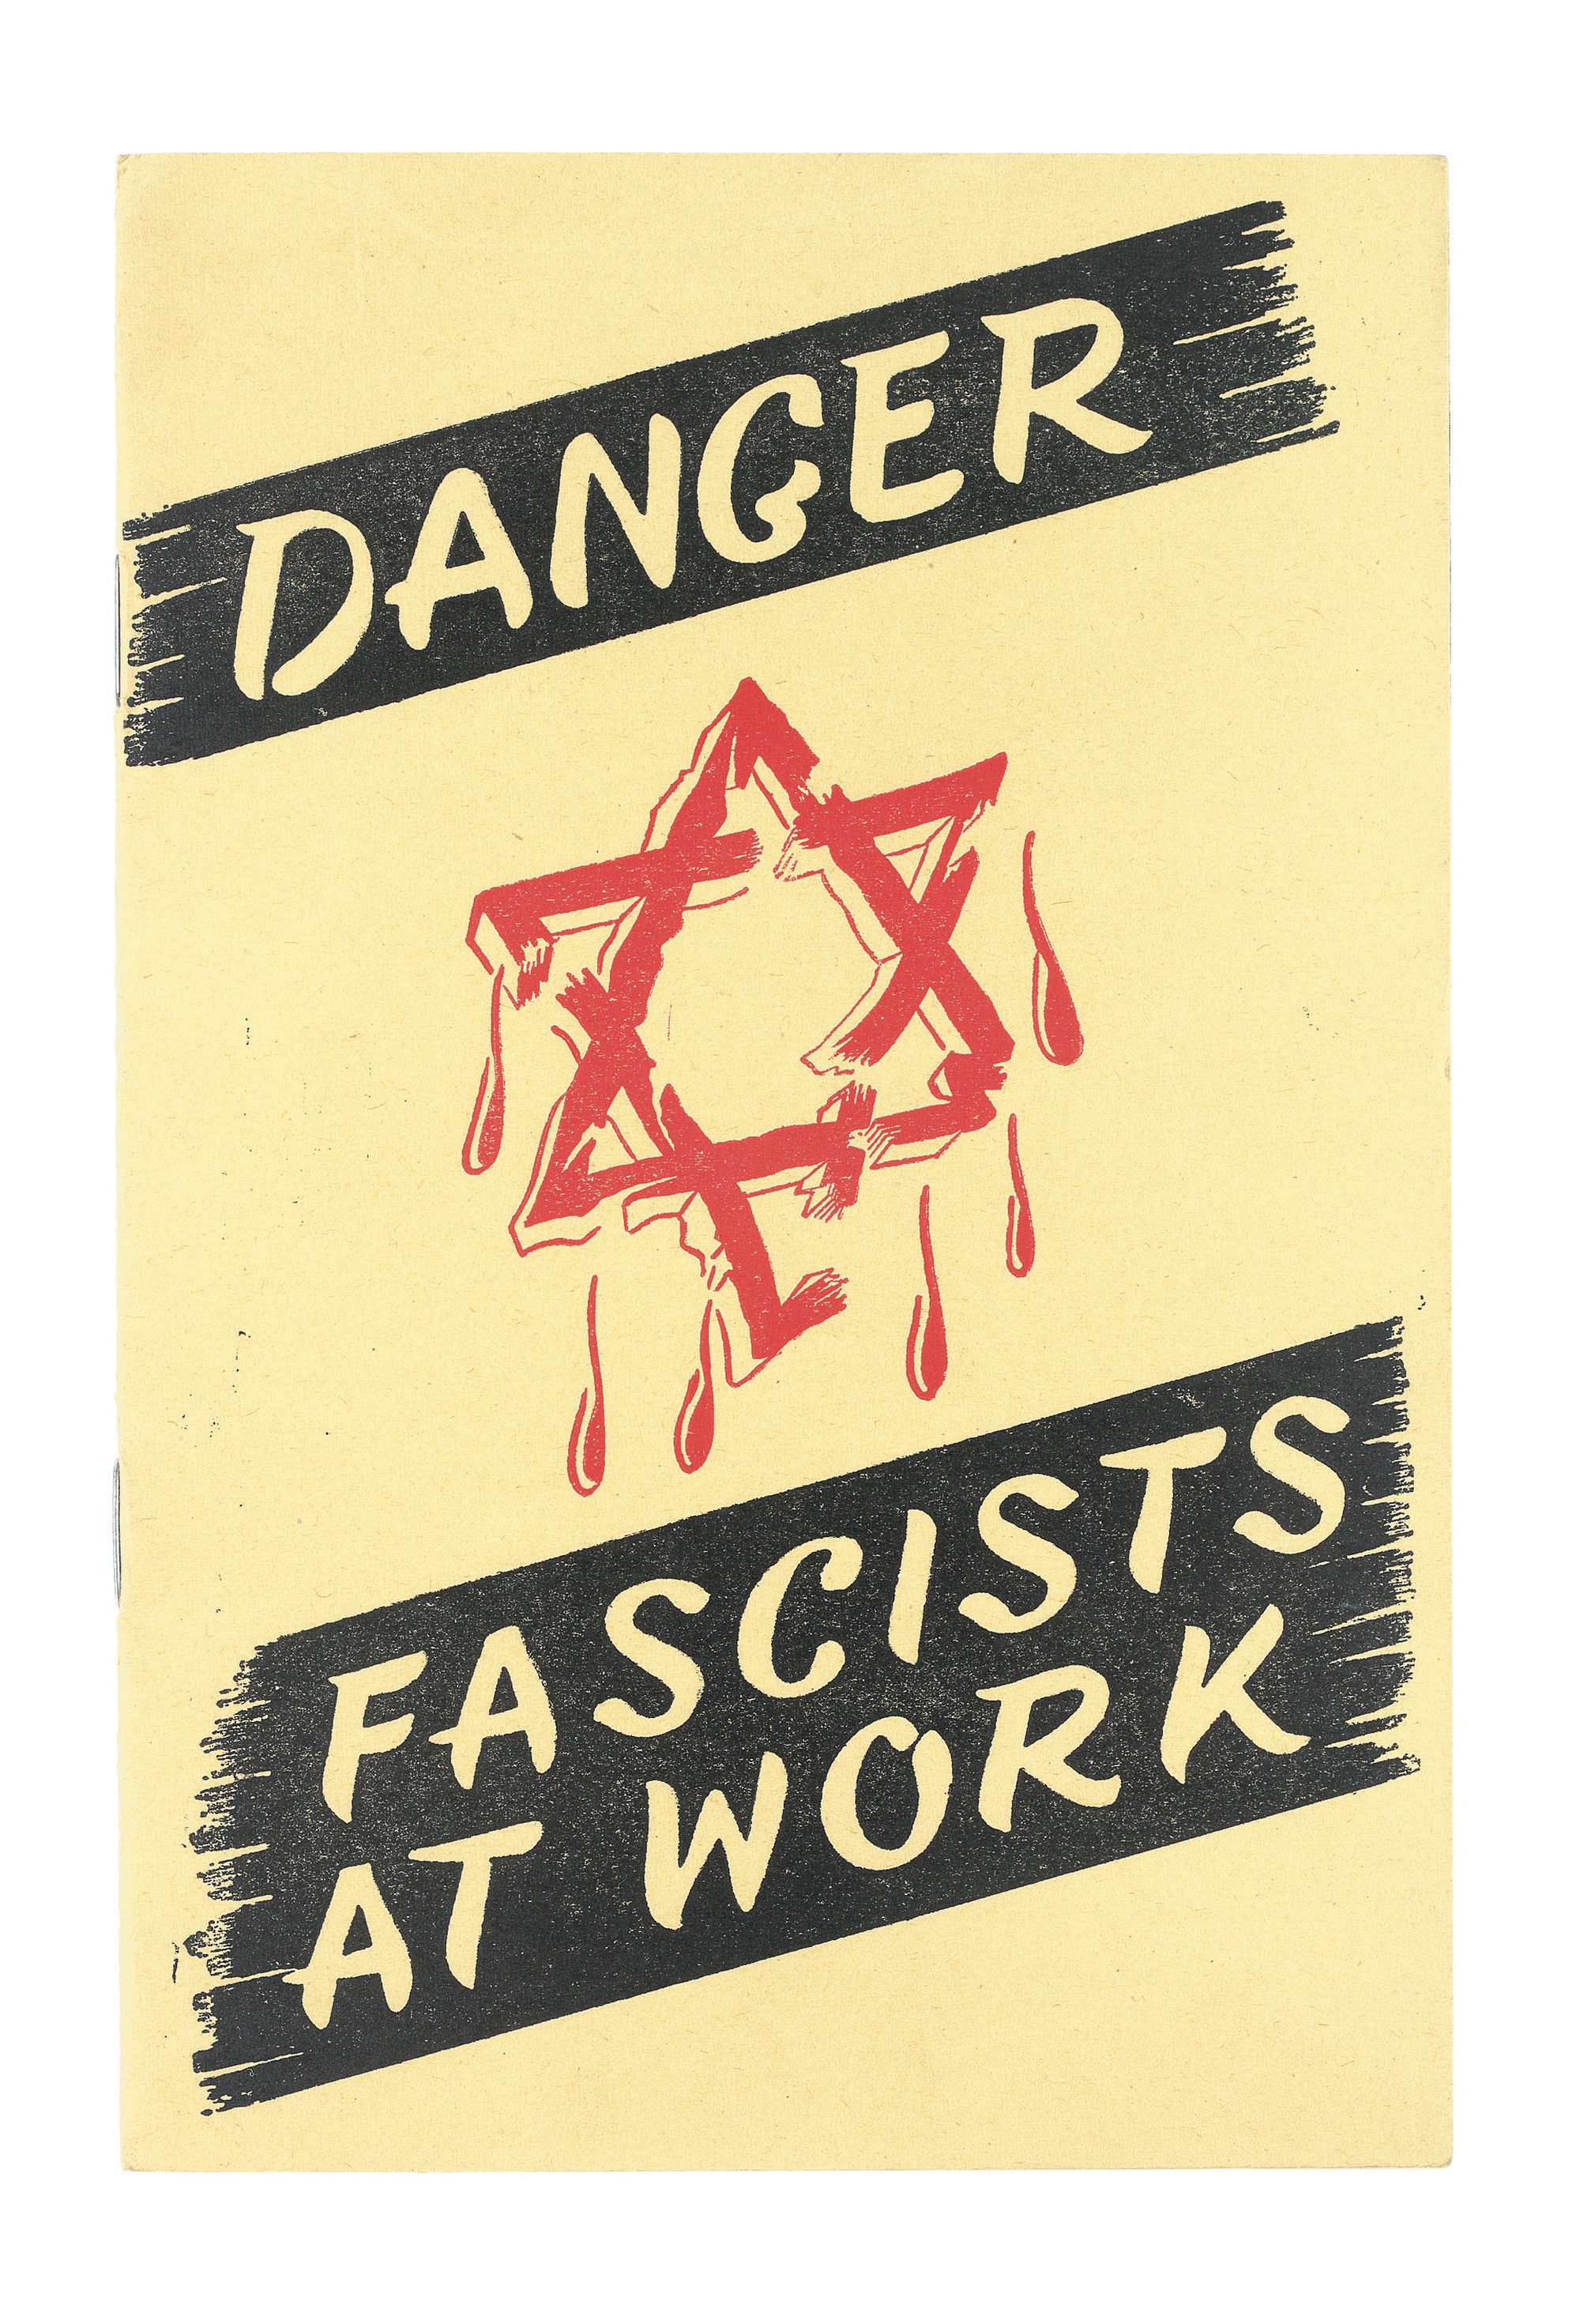 Danger Fascists At Work The Jewish Museum London